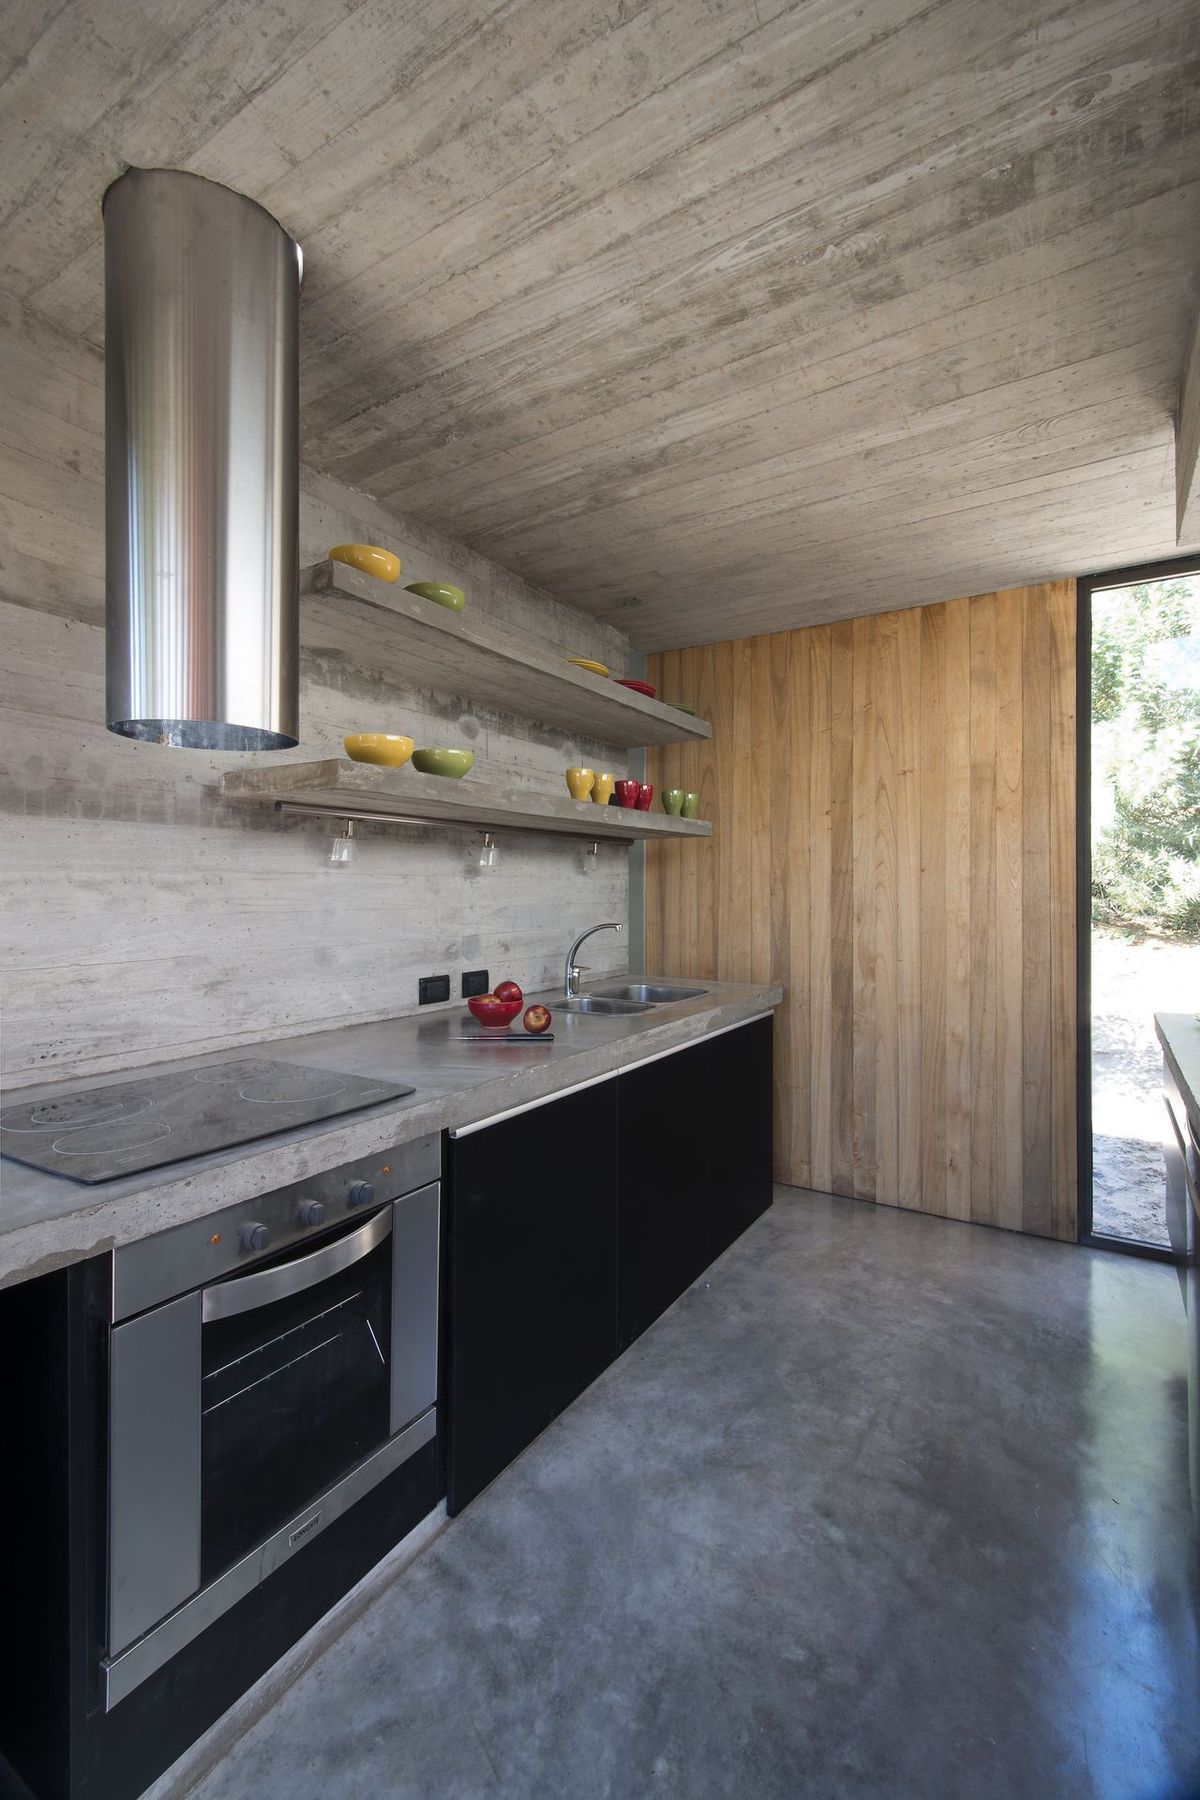 MR house by Luciano Kruk Arquitectos | Livegreenblog